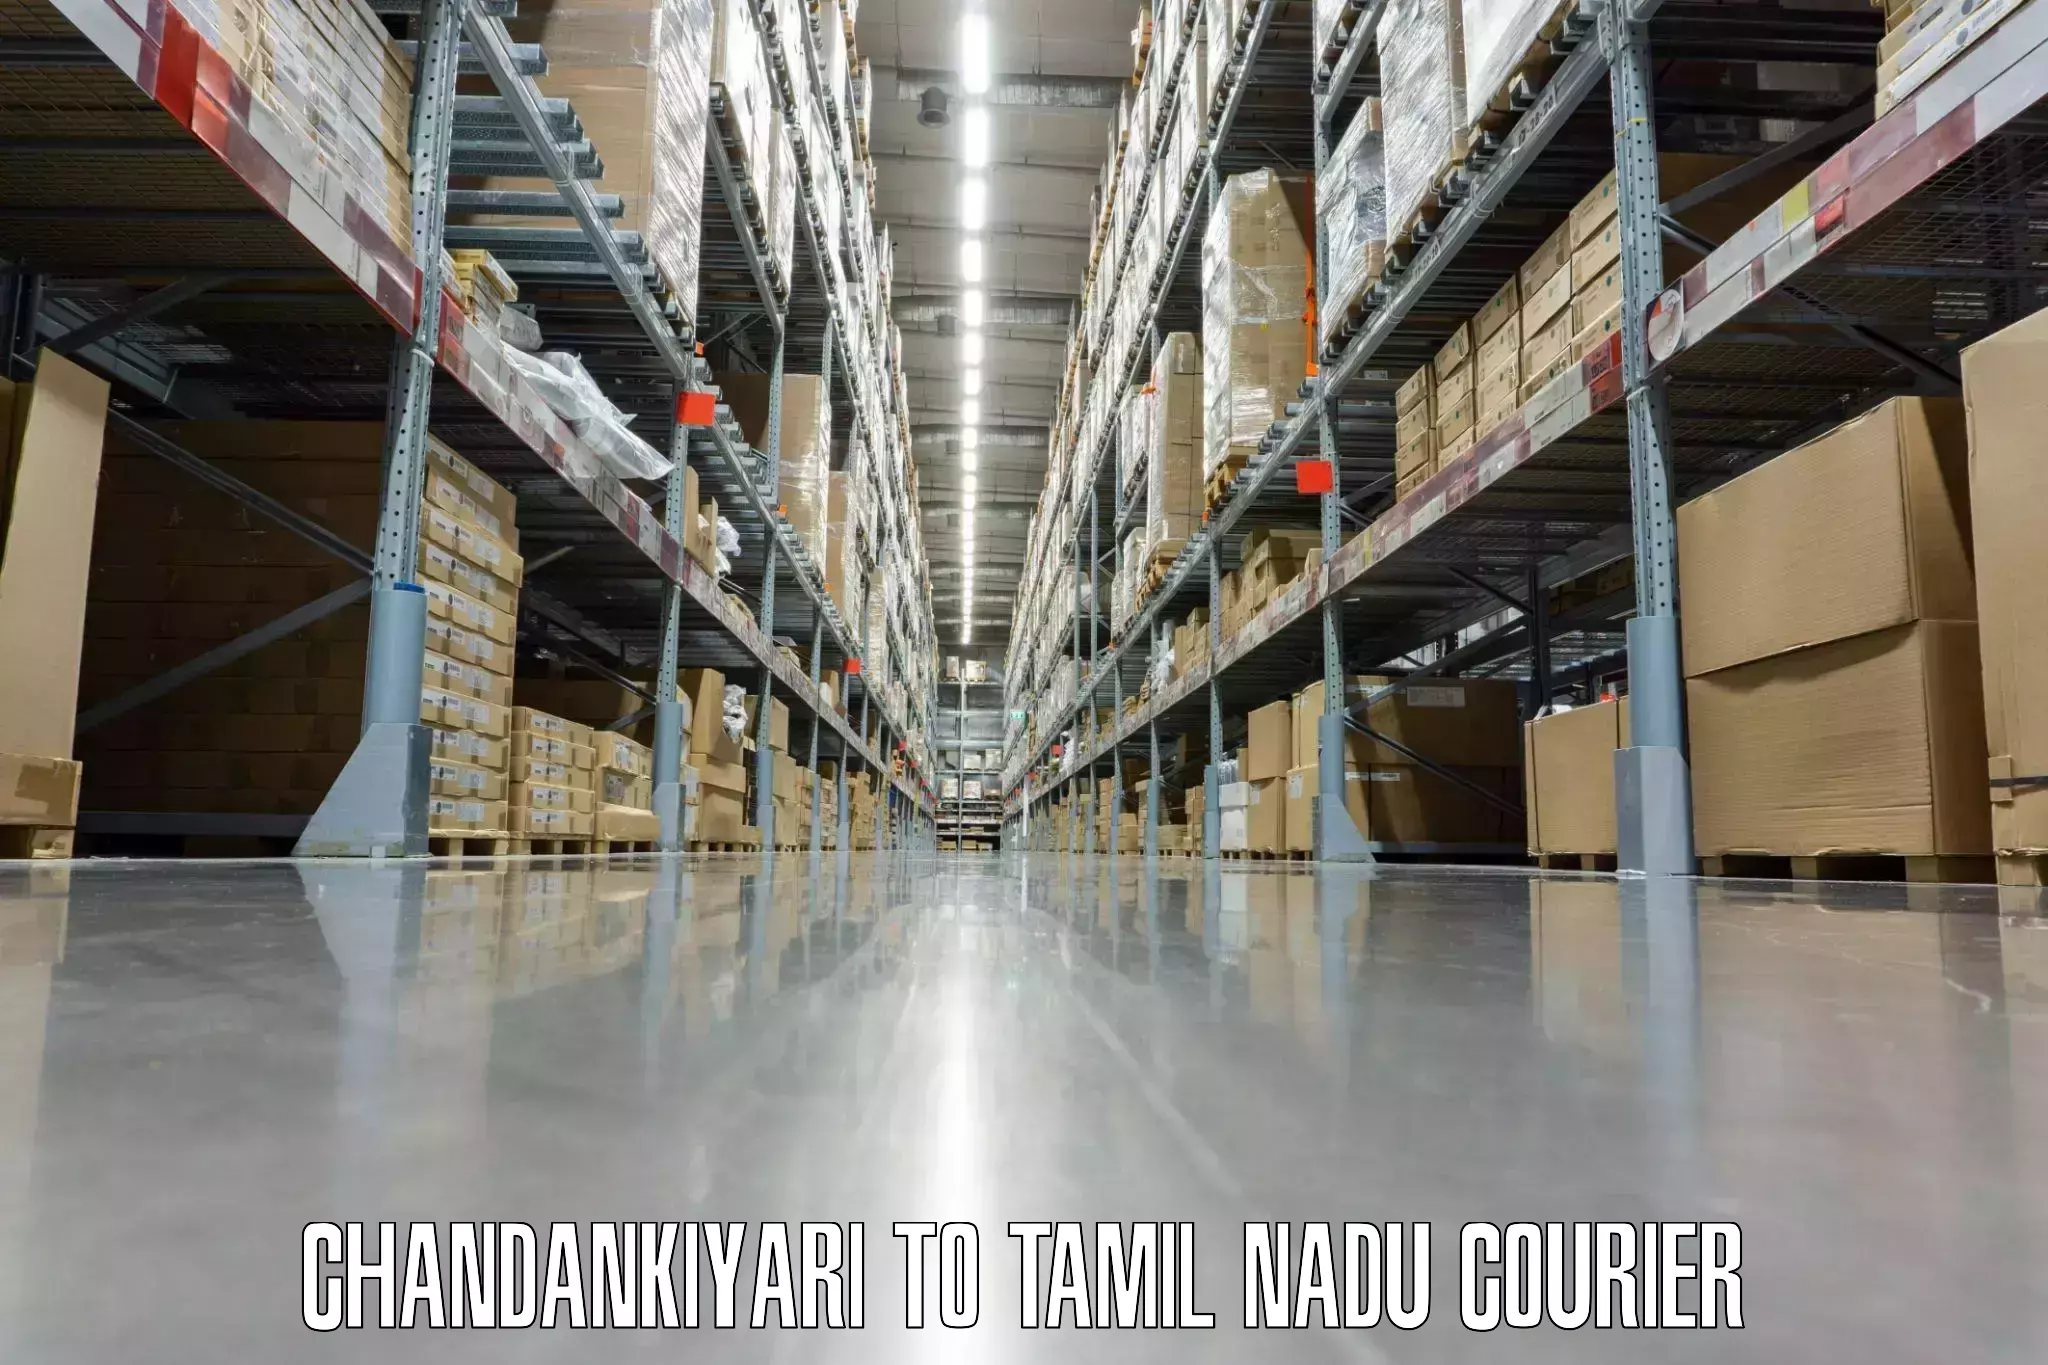 Luggage transport company Chandankiyari to Tamil Nadu